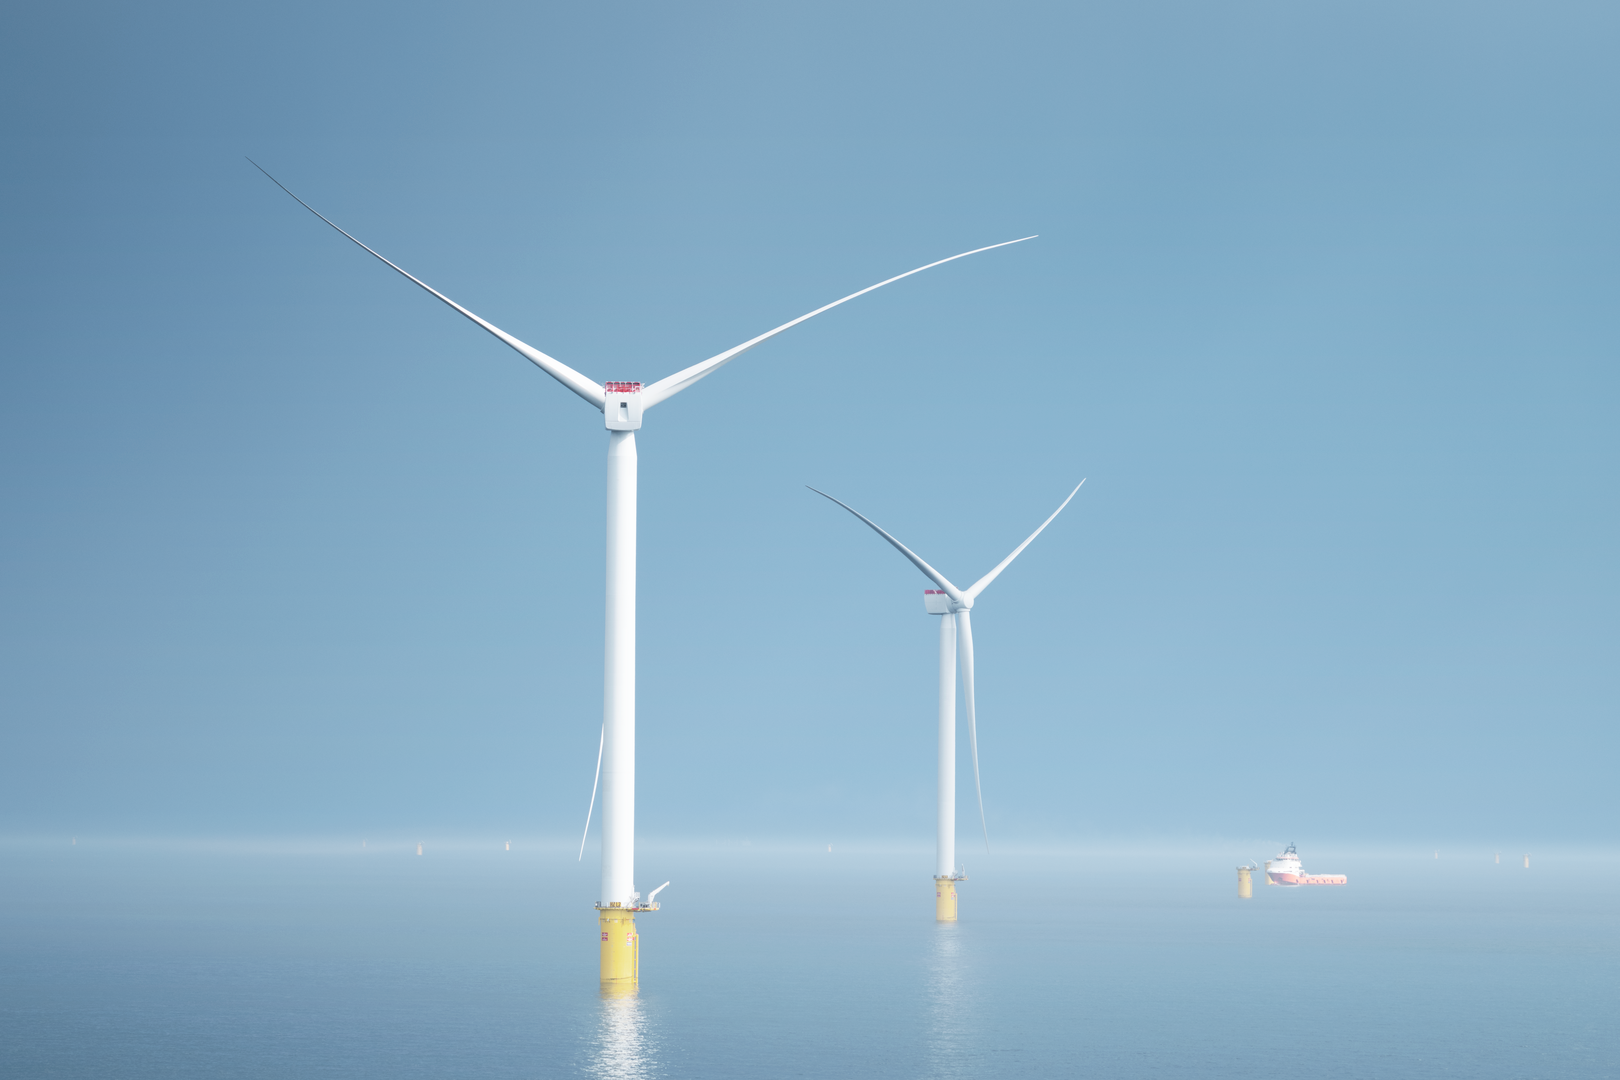 Offshore windfarm Hollandse Kust Zuid, North Sea, Netherlands